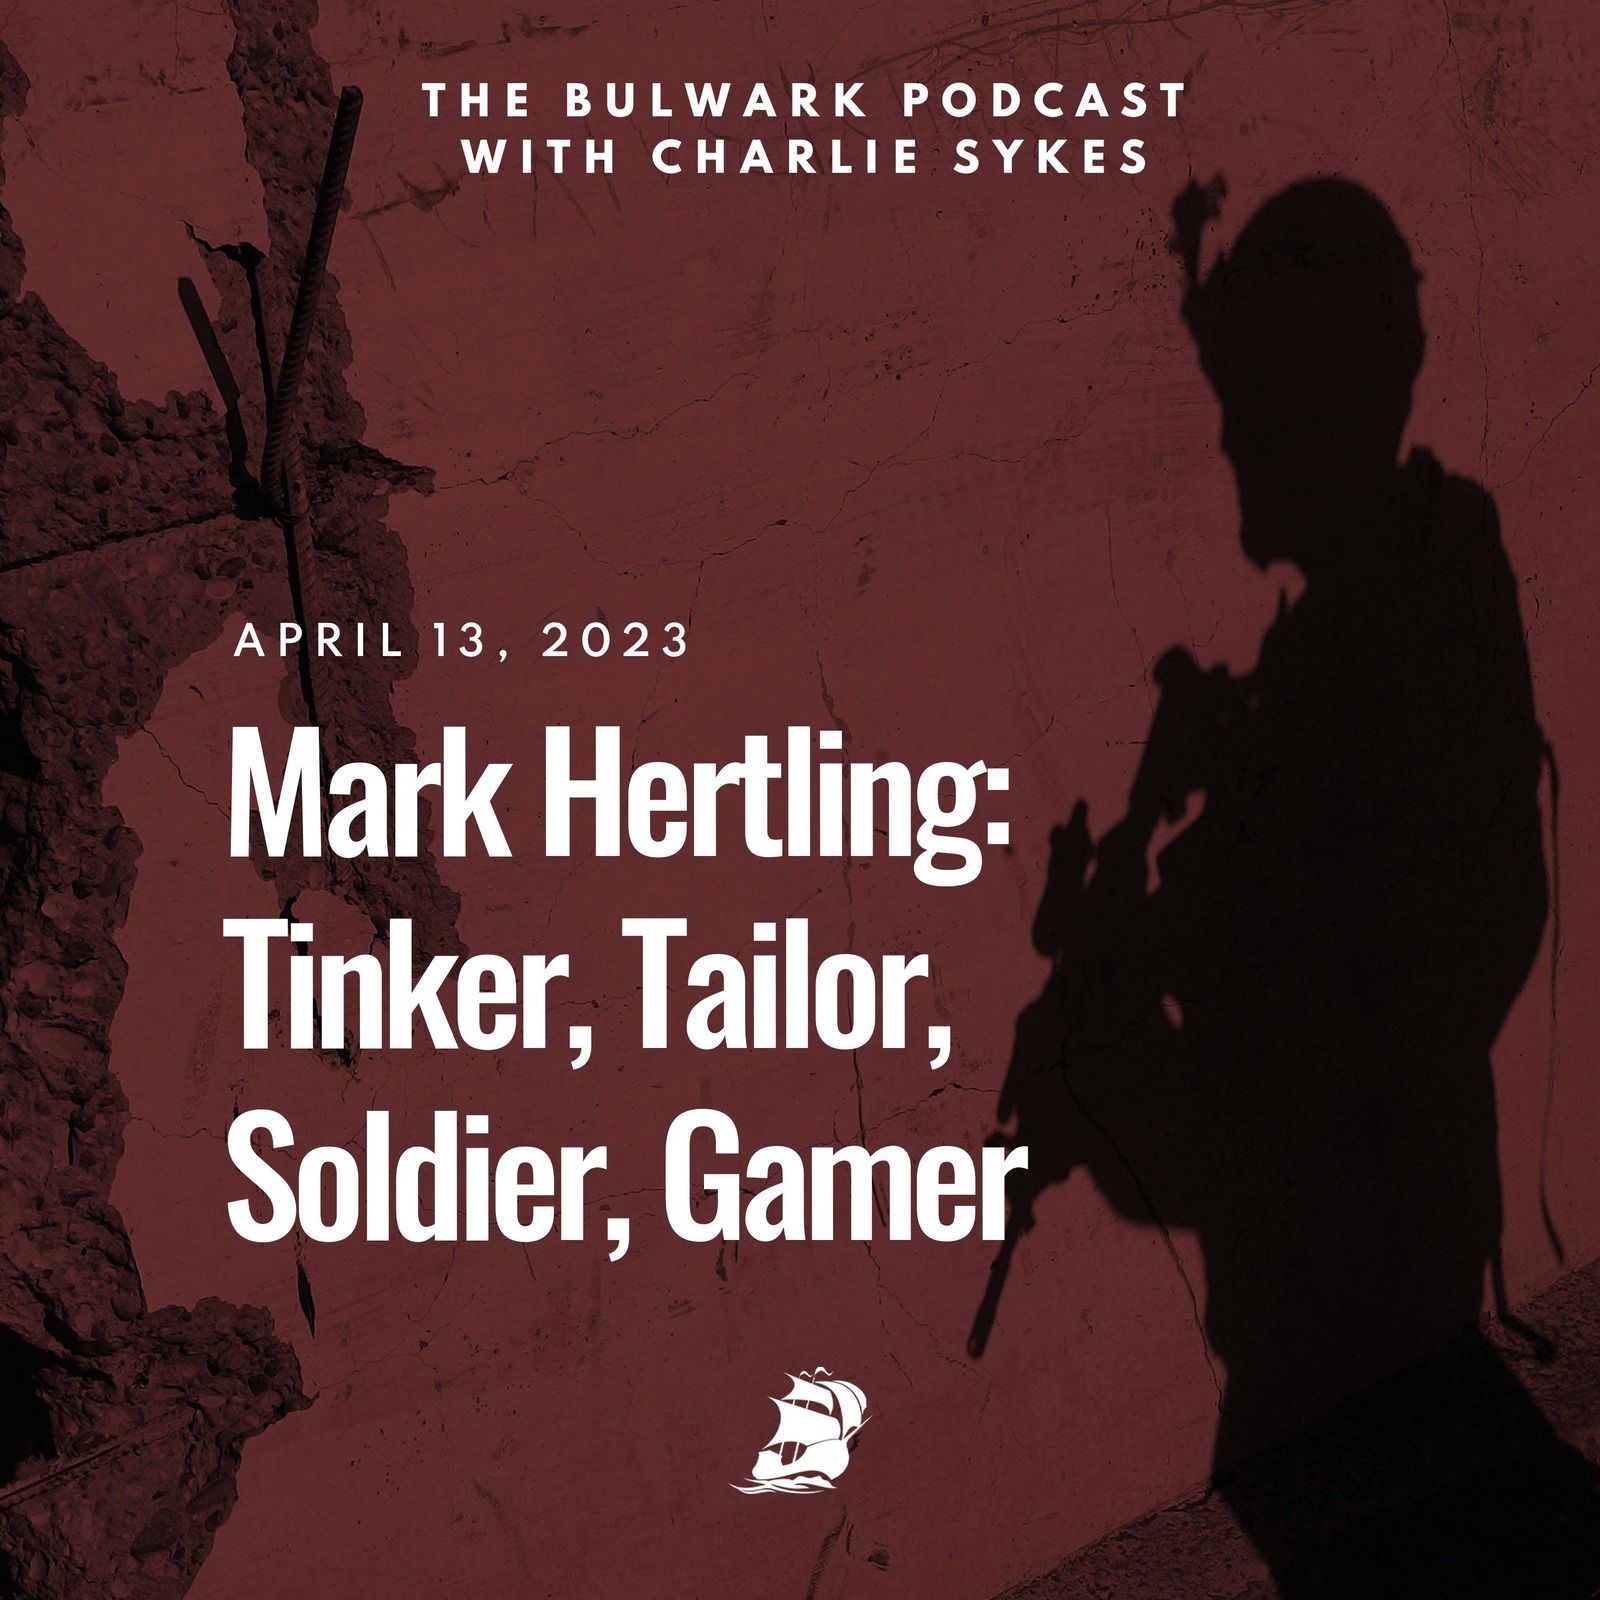 Mark Hertling: Tinker, Tailor, Soldier, Gamer